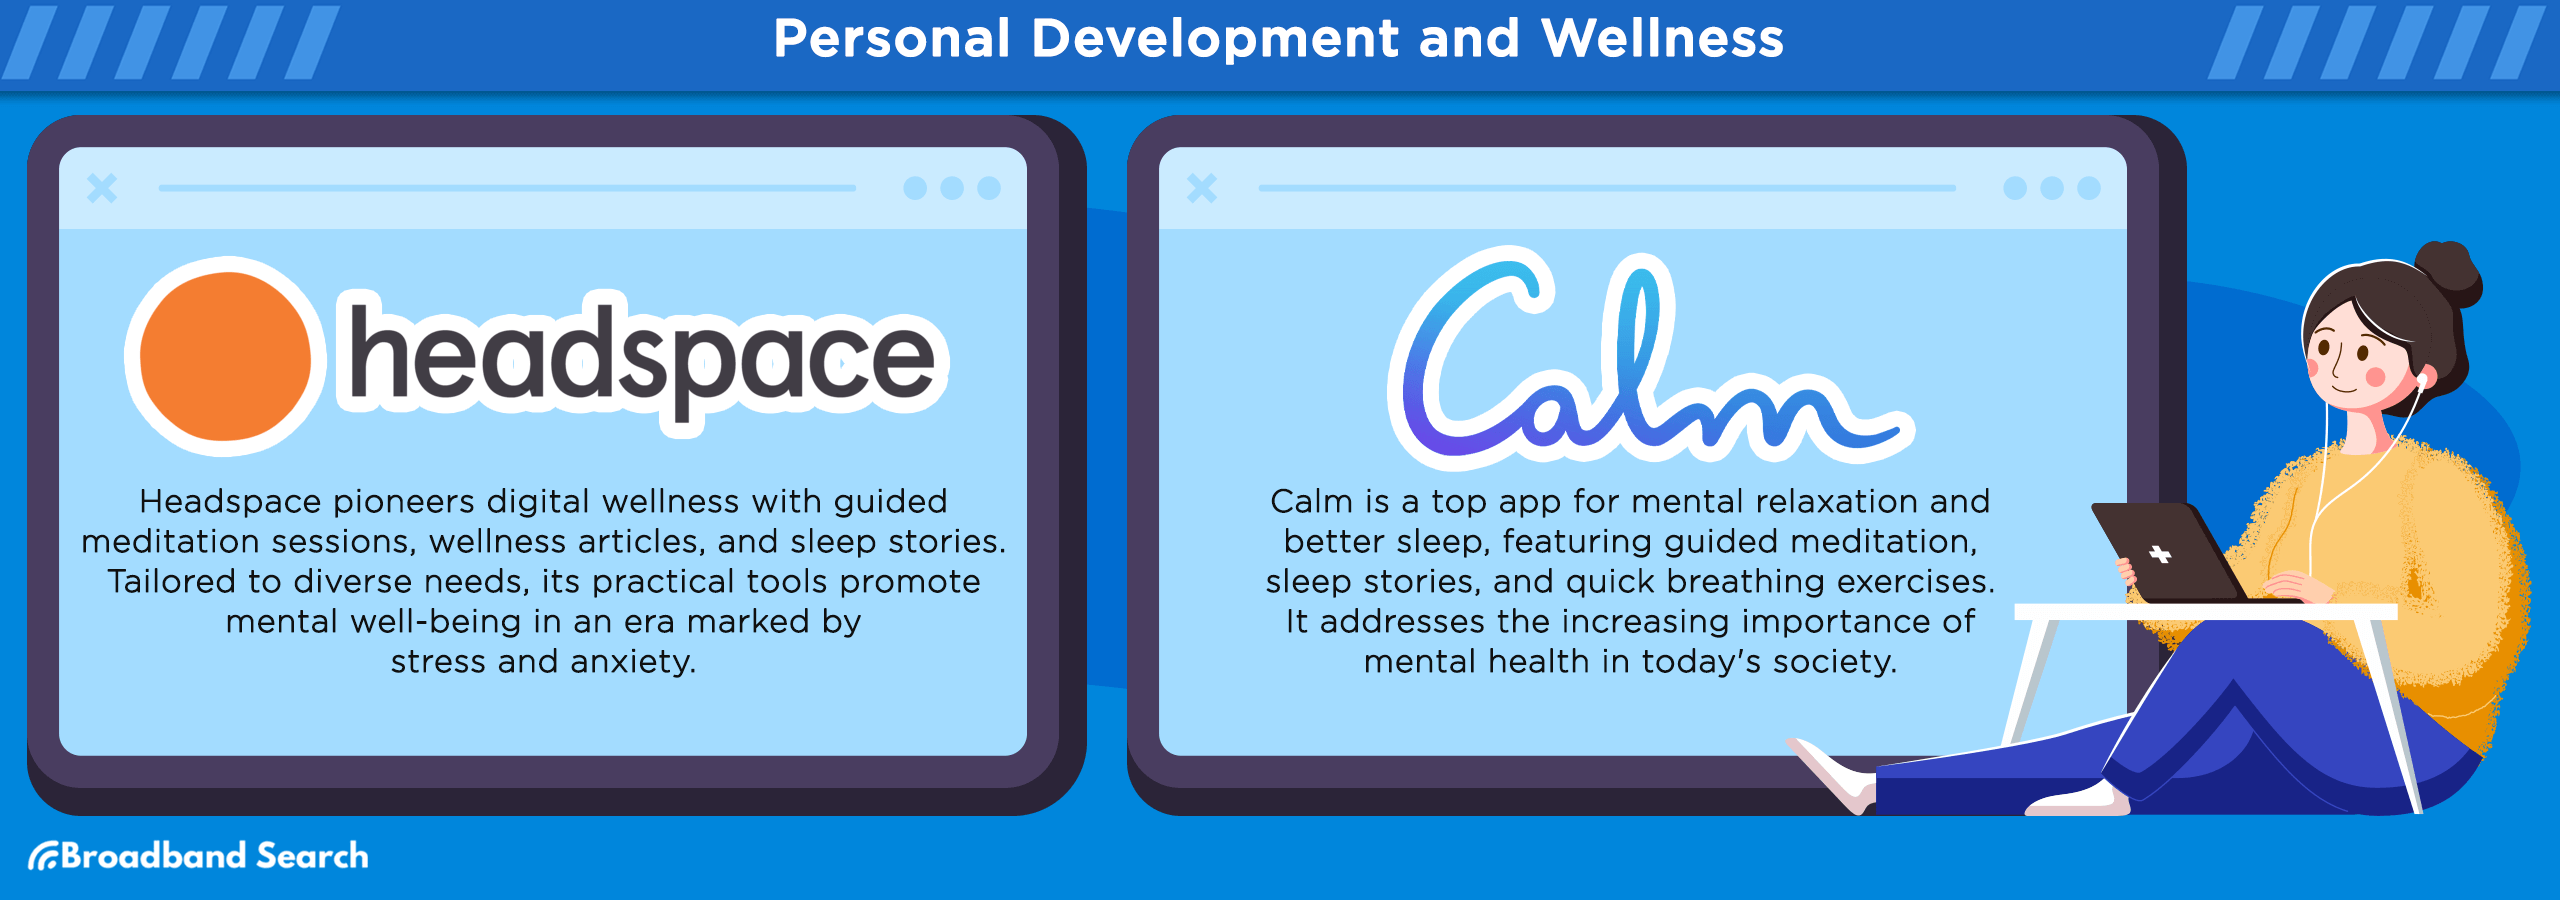 Personal development and wellness